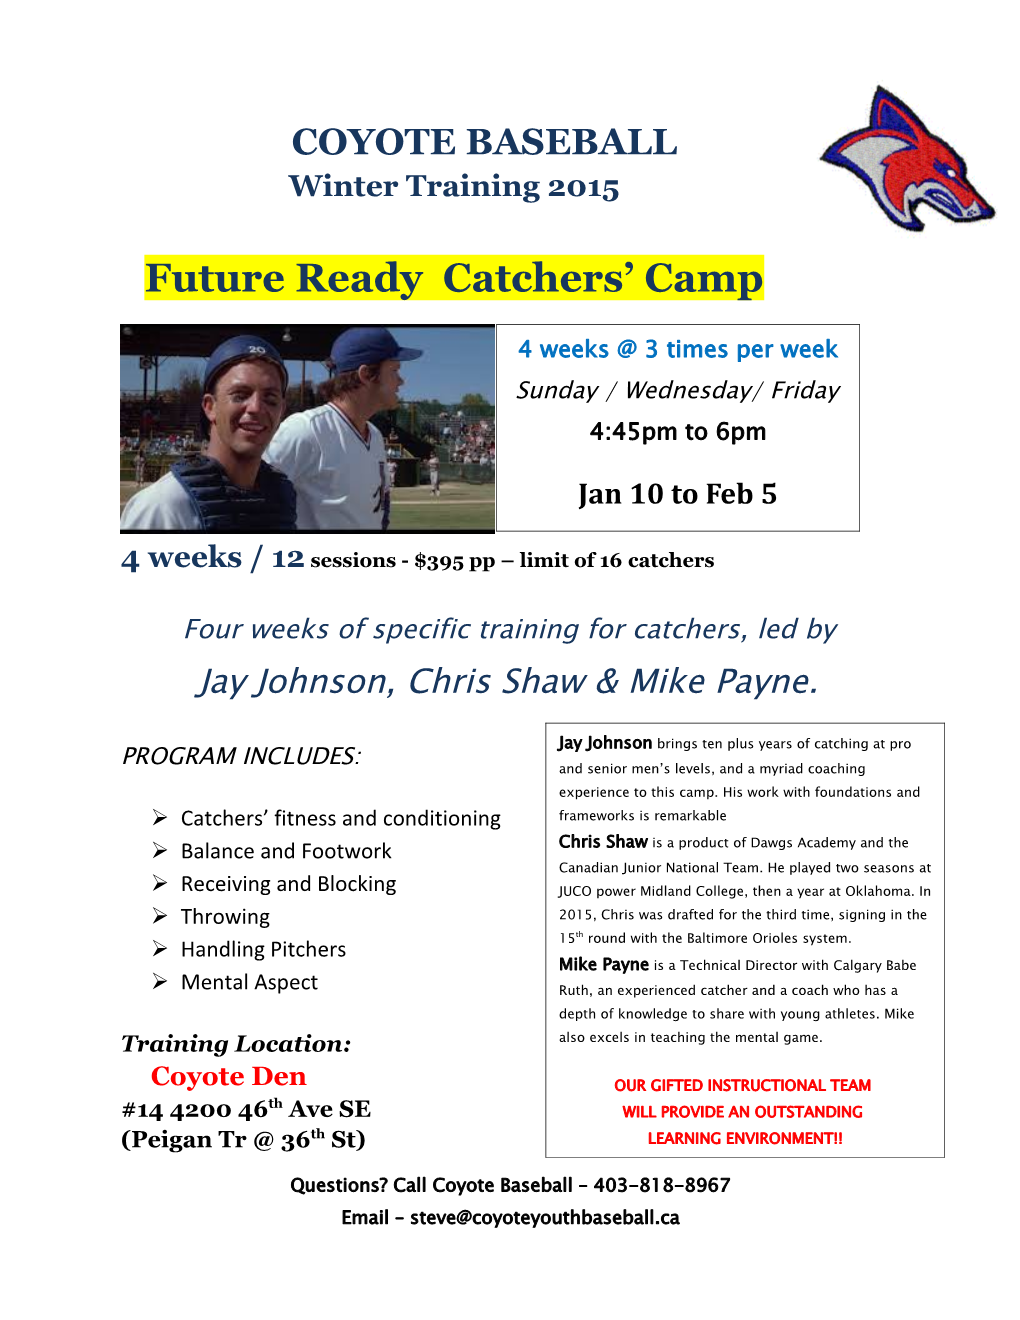 Future Ready Catchers Camp